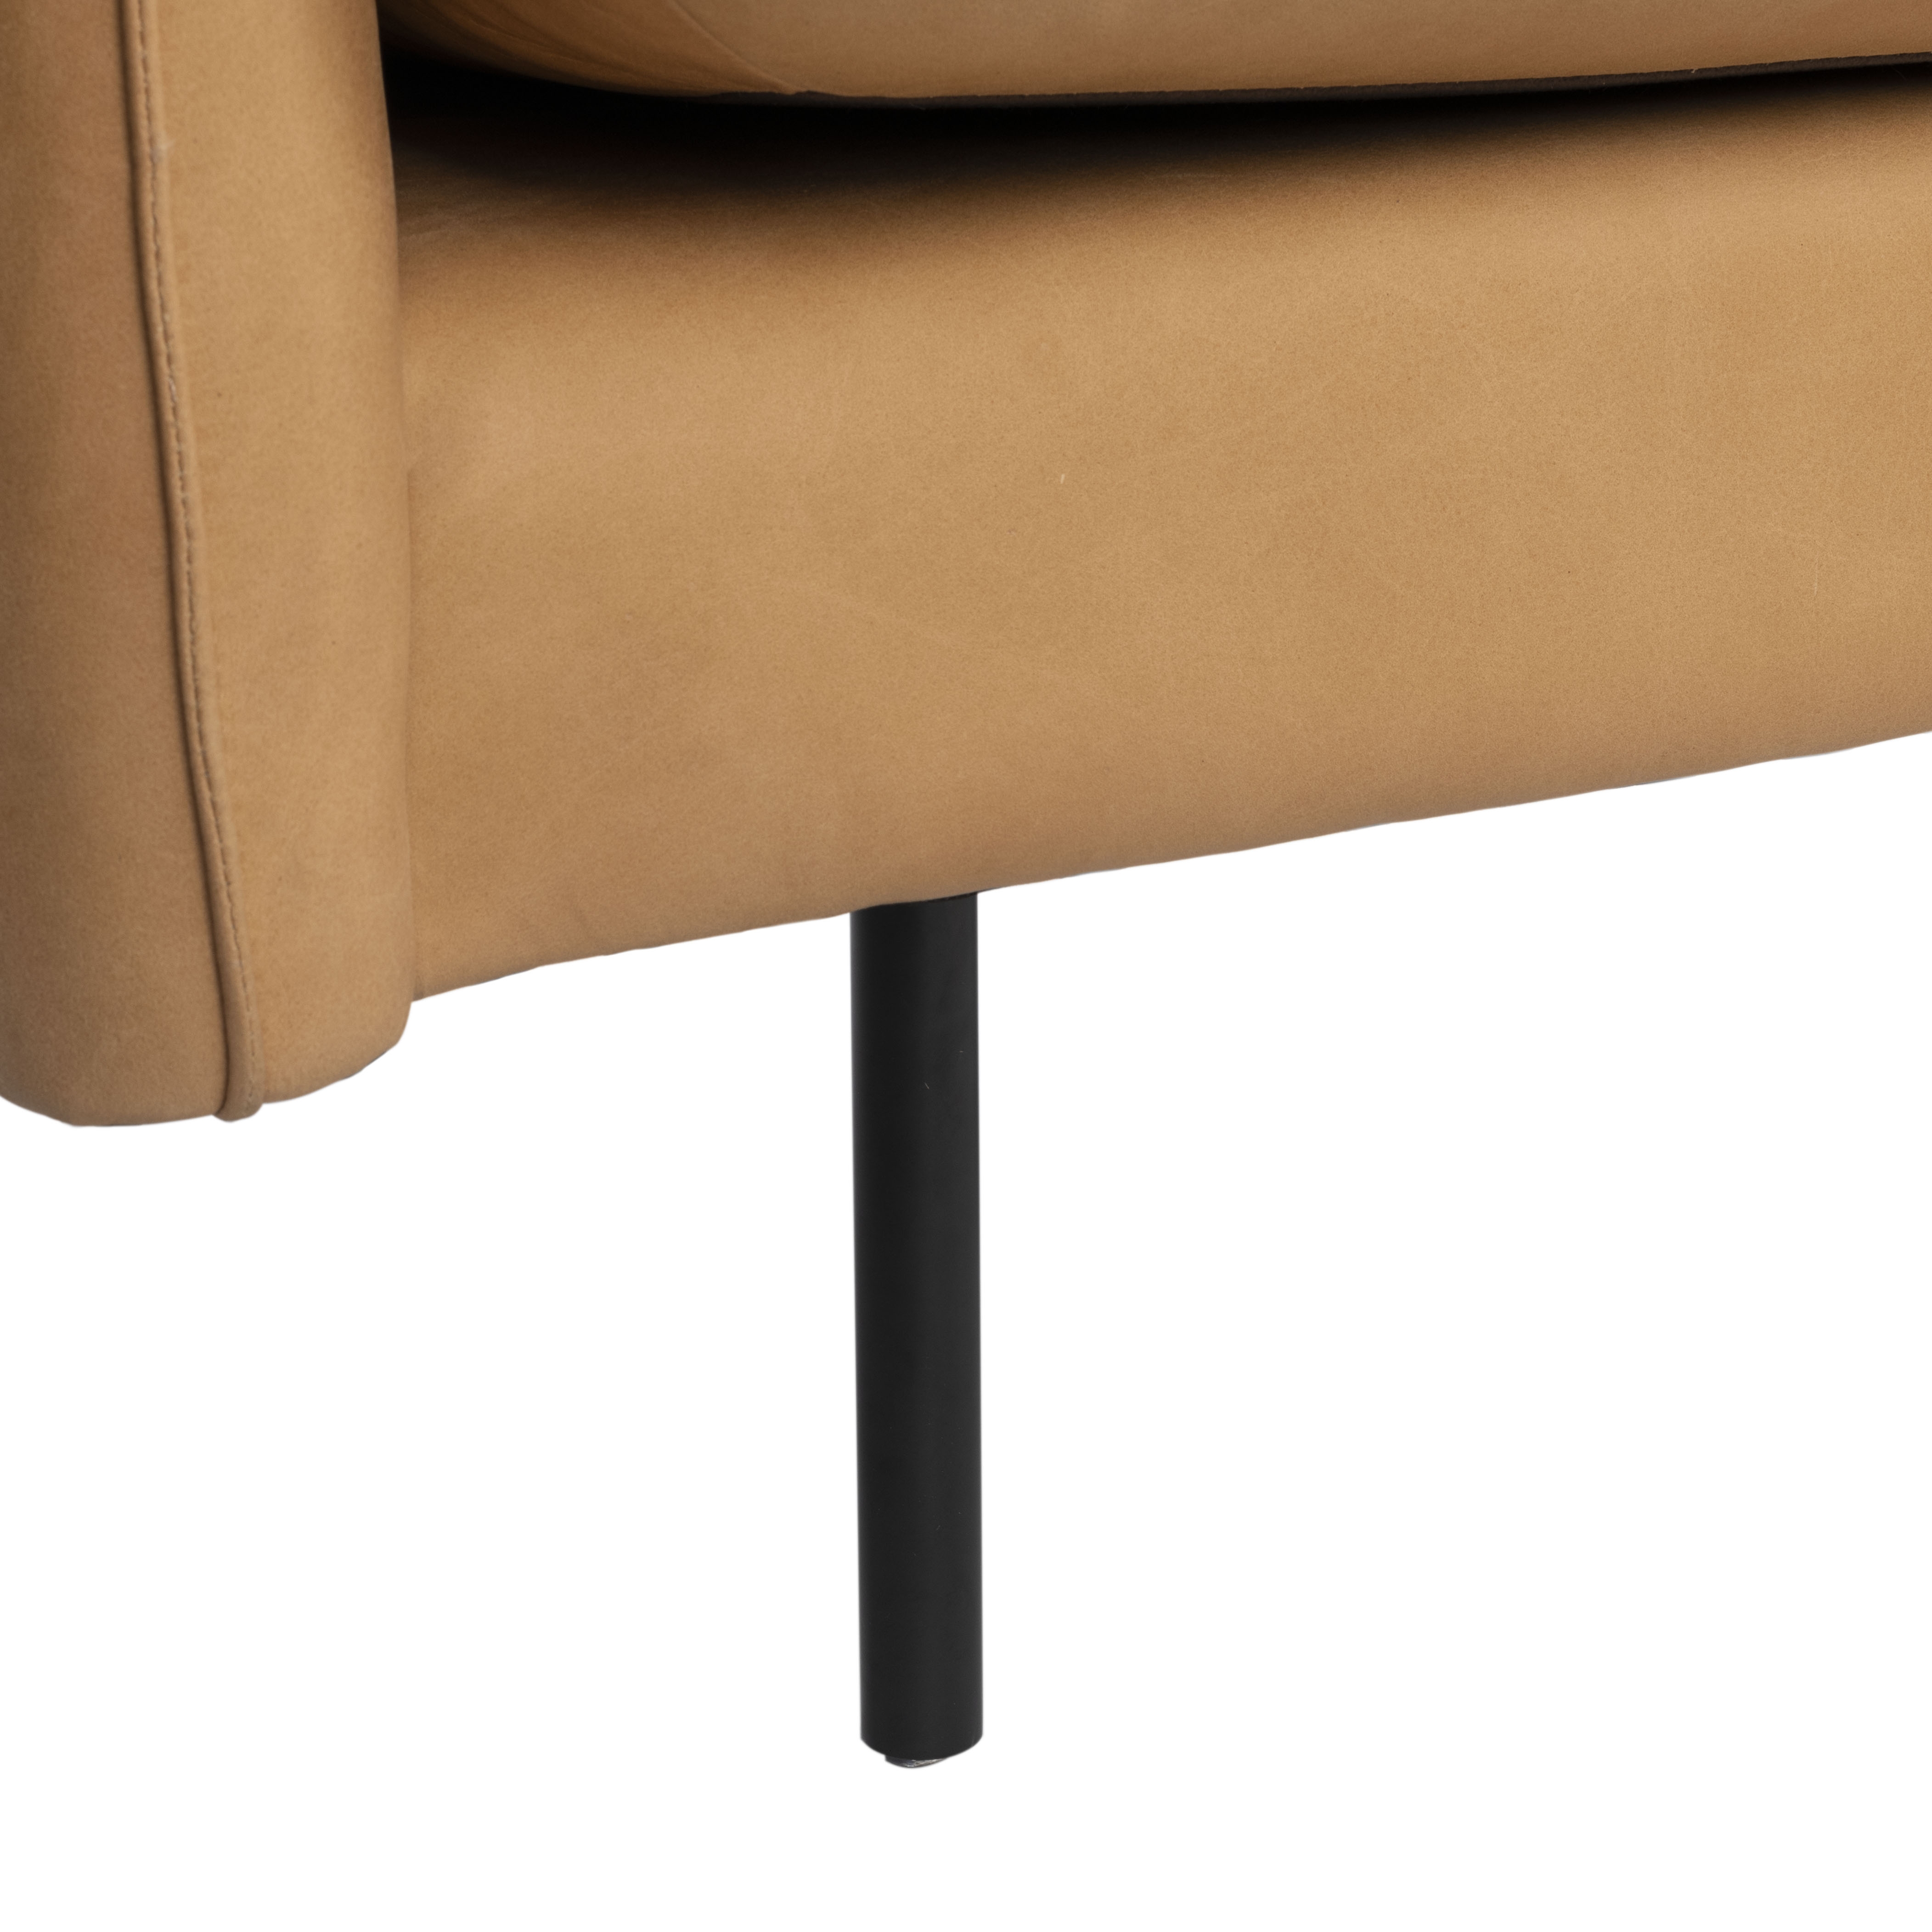 Gerlaich Italian Leather Sofa, Tan - Image 2